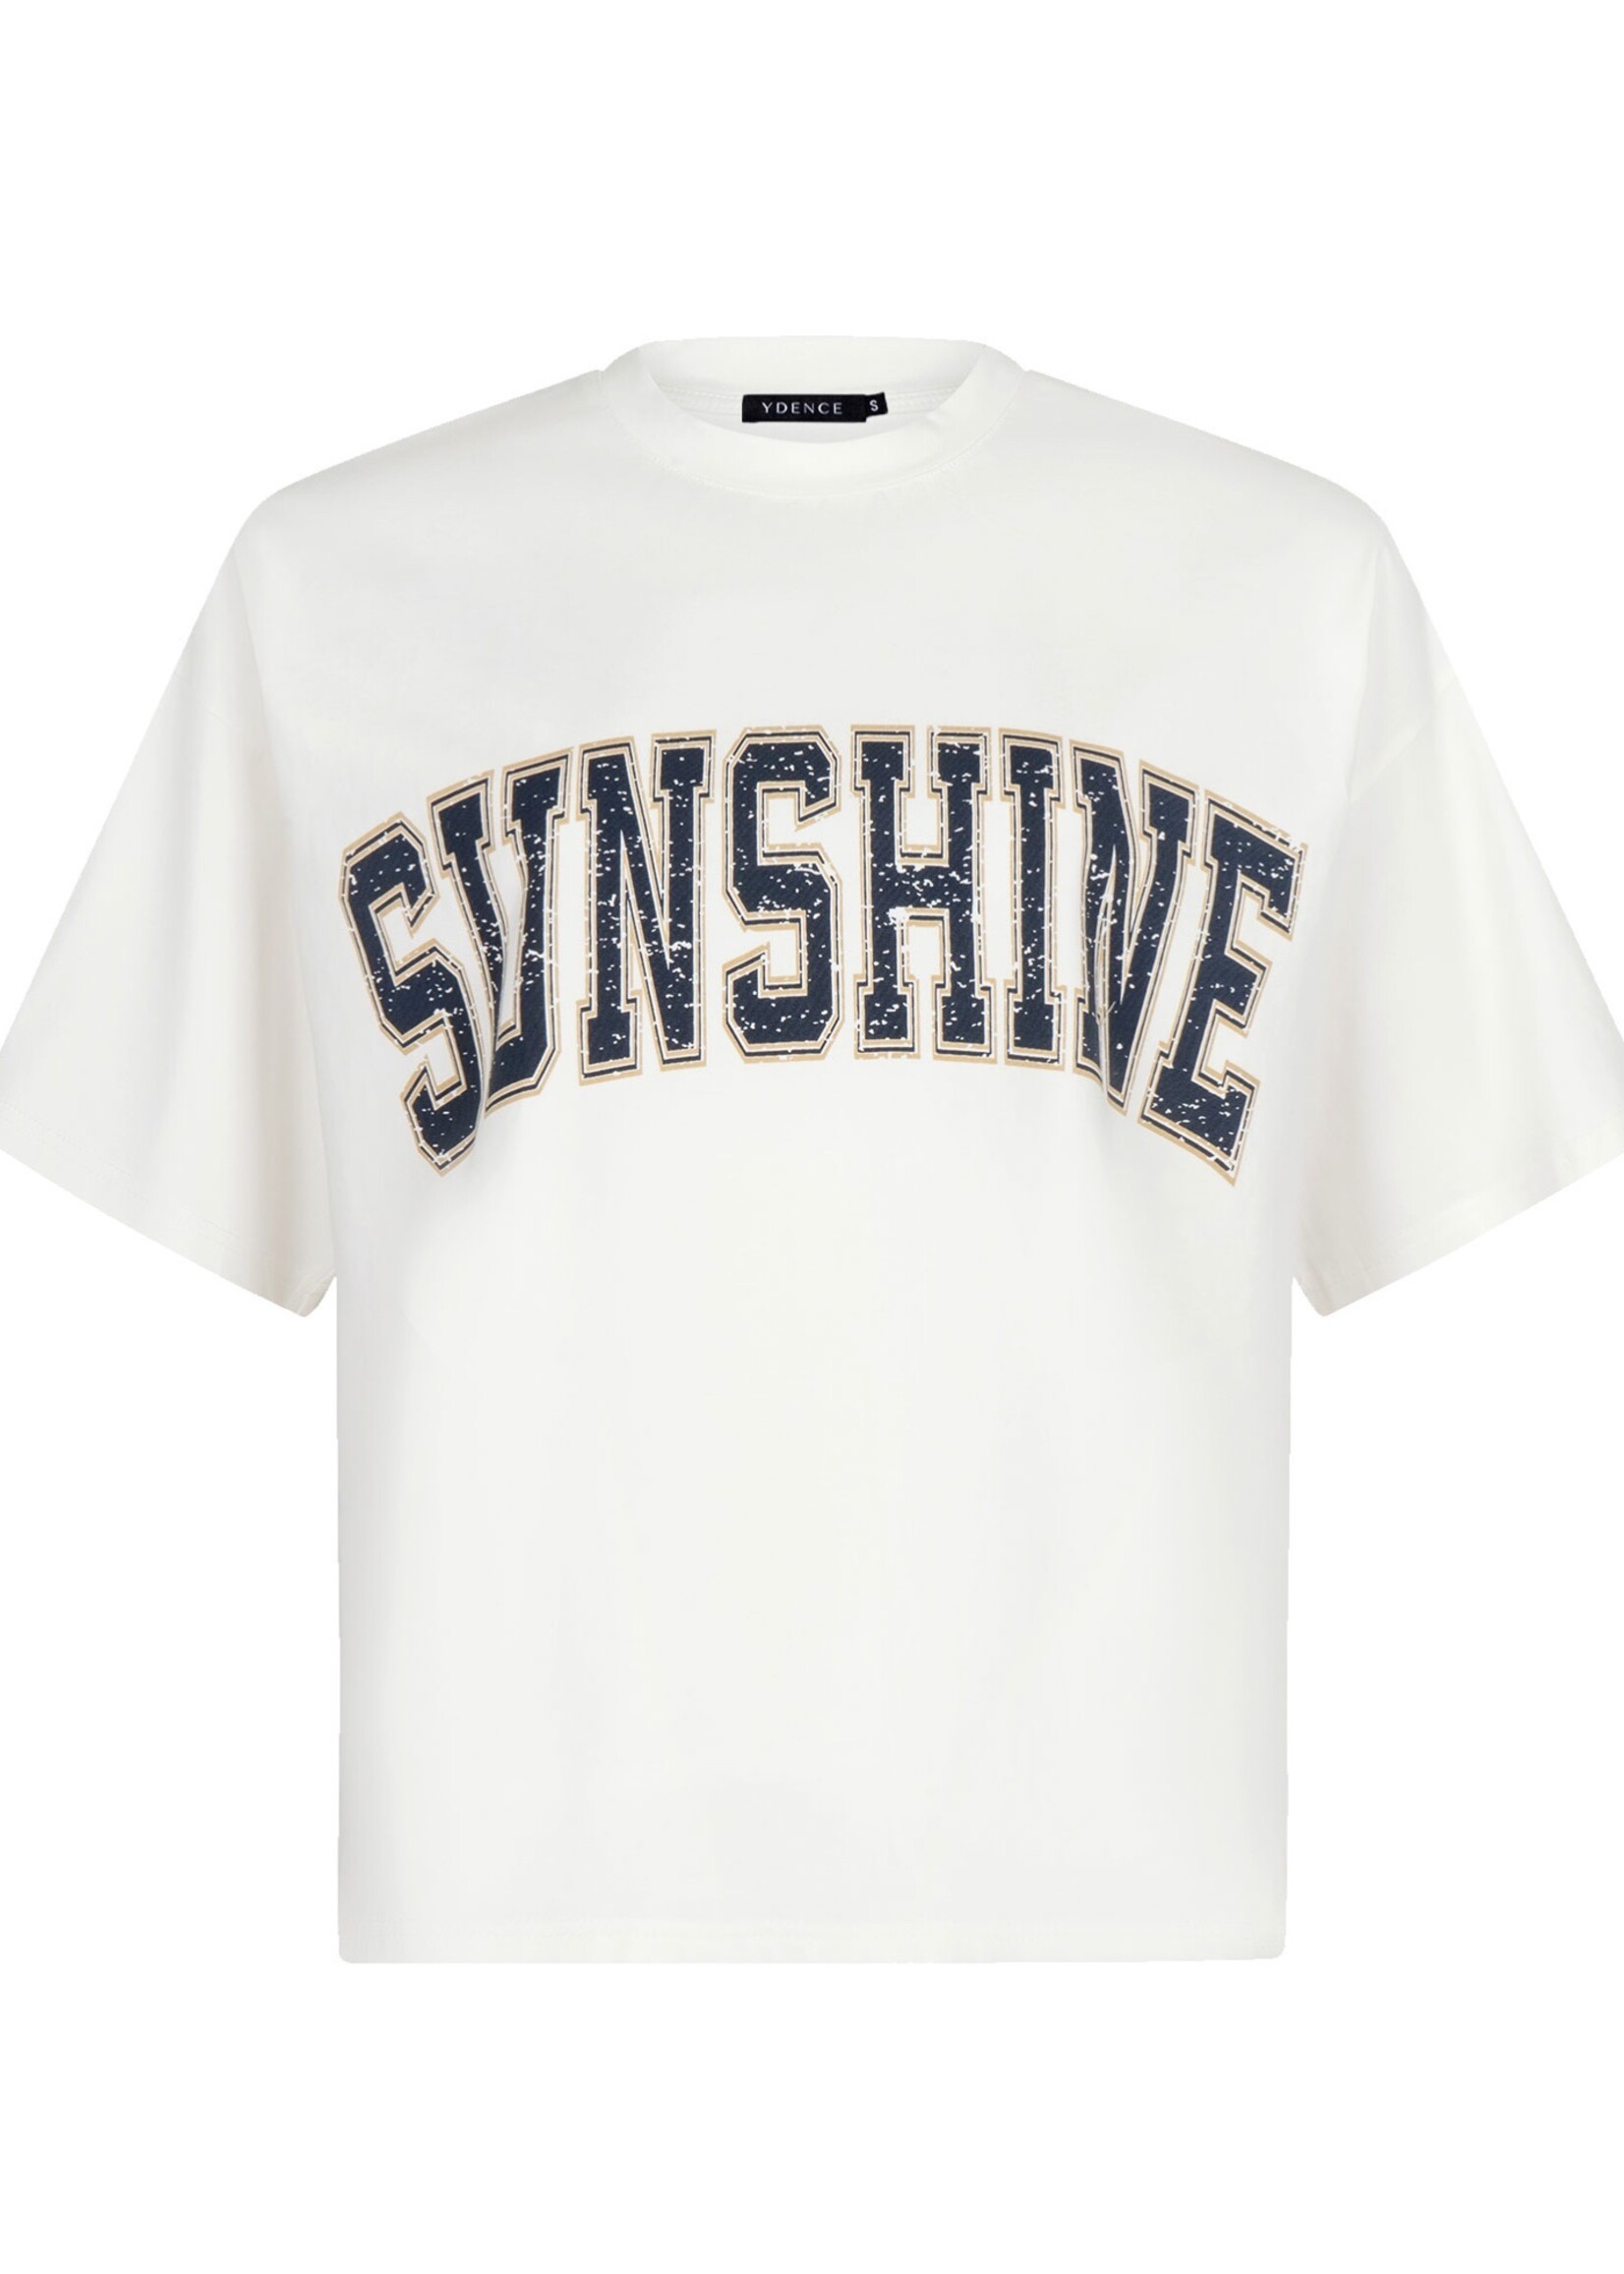 Ydence T-shirt Sunshine navy